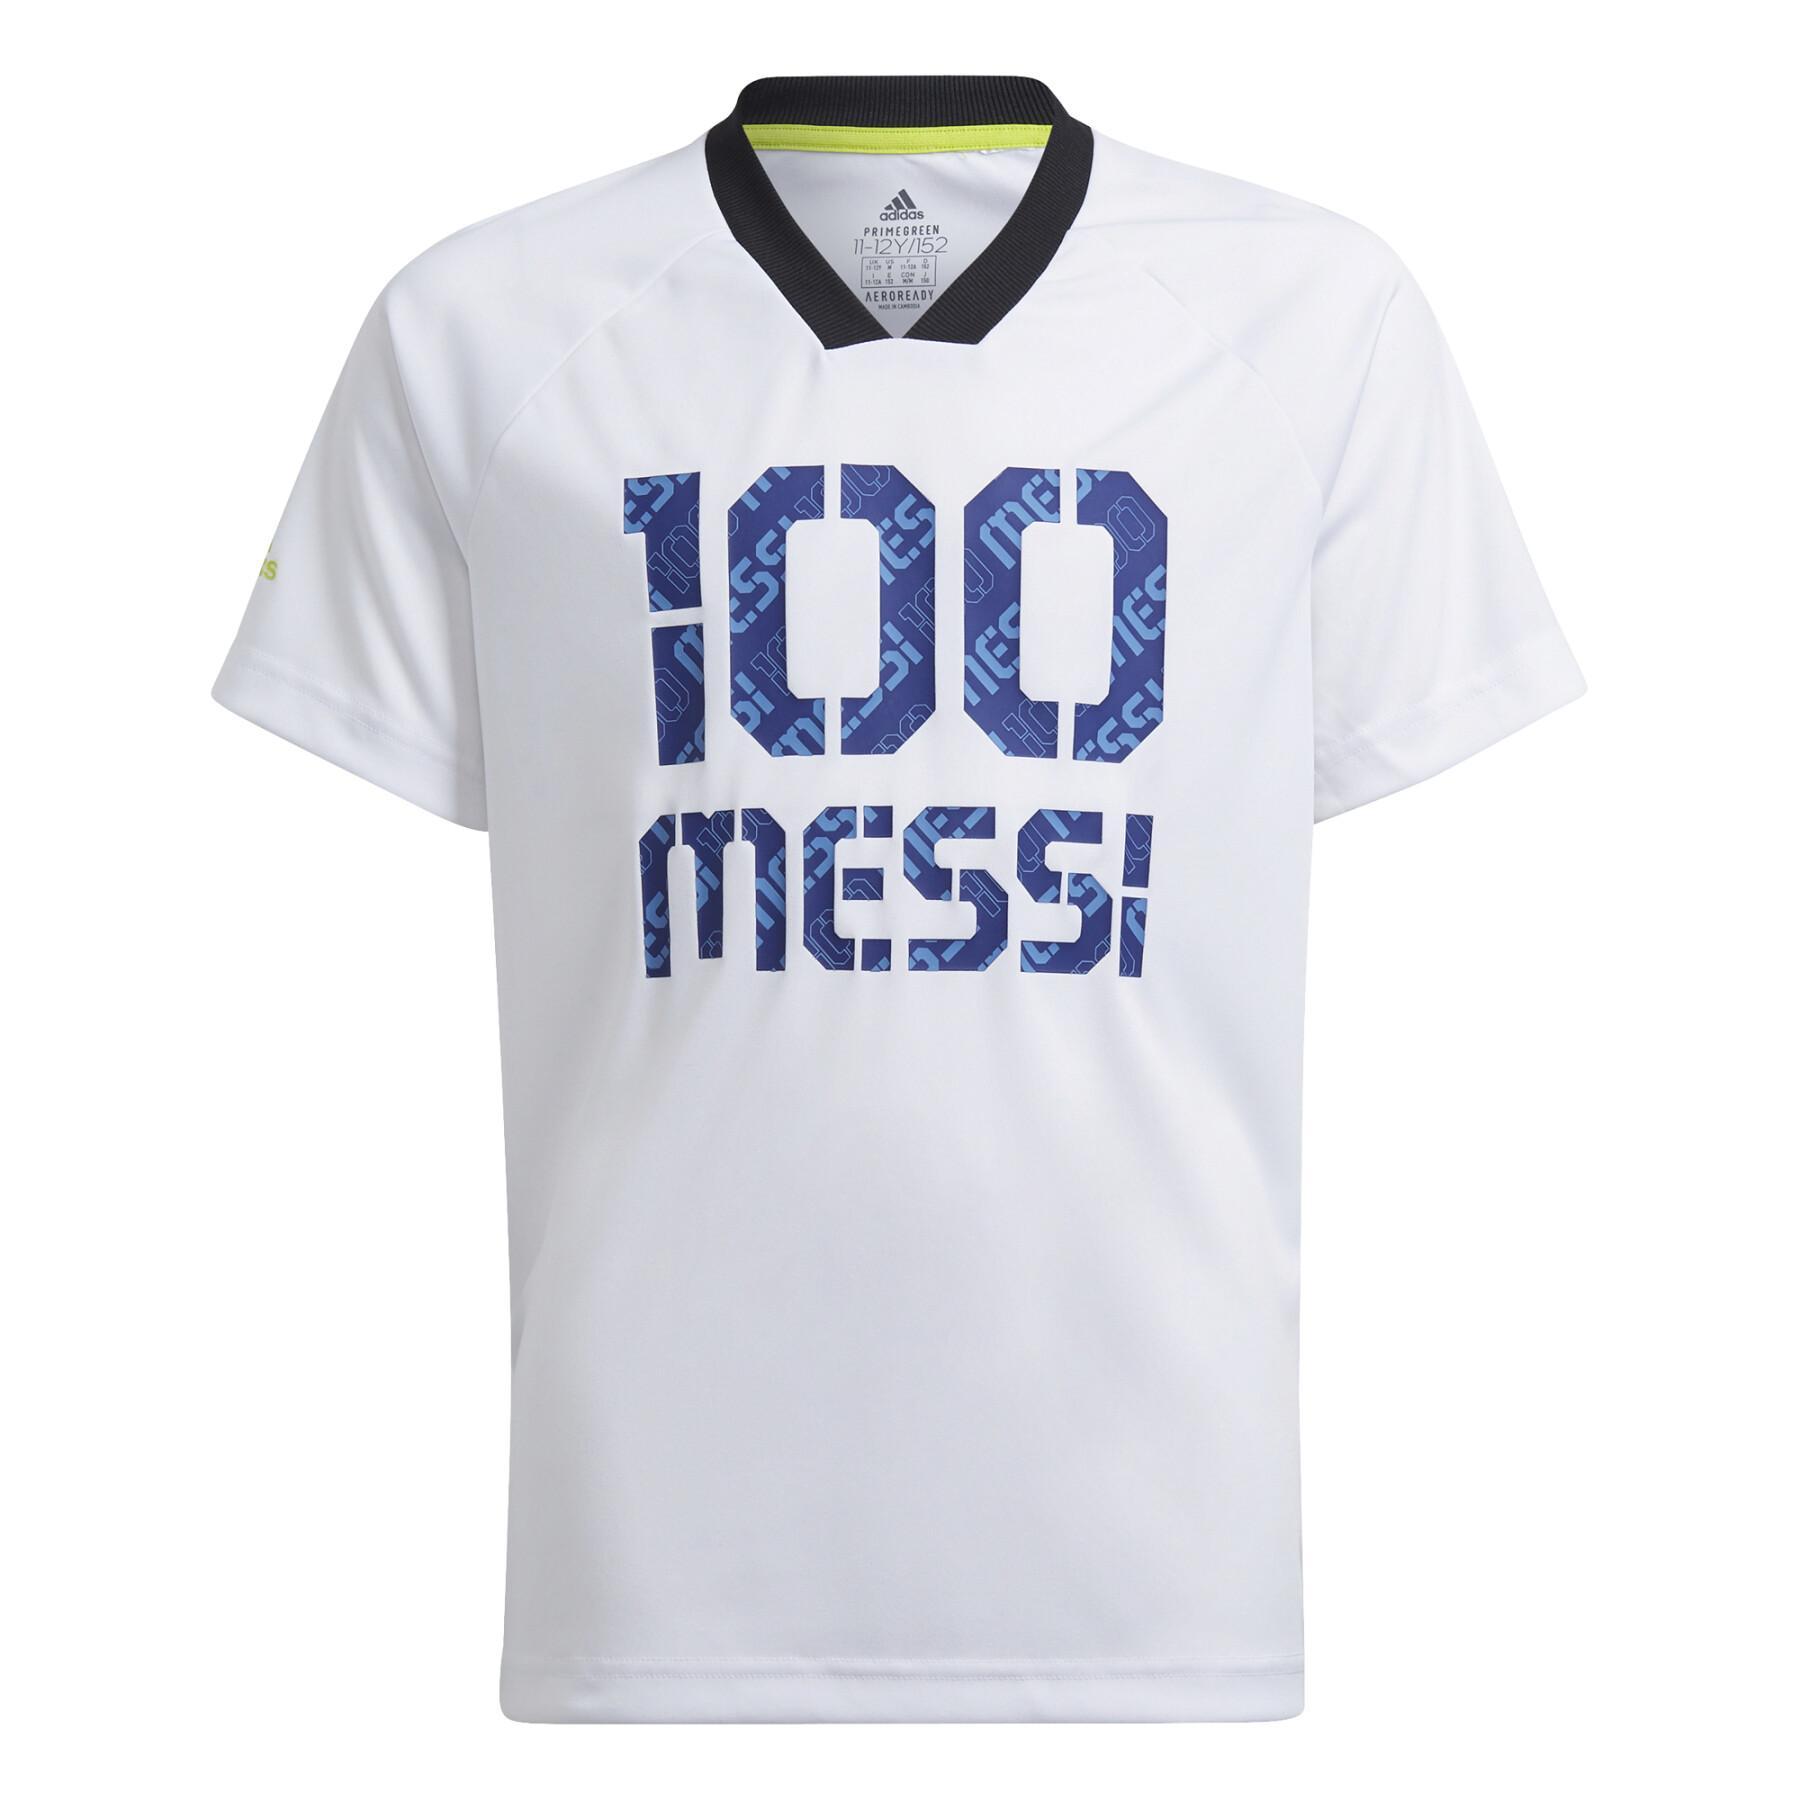 Survêtement enfant adidas Messi Football-Inspired Summer